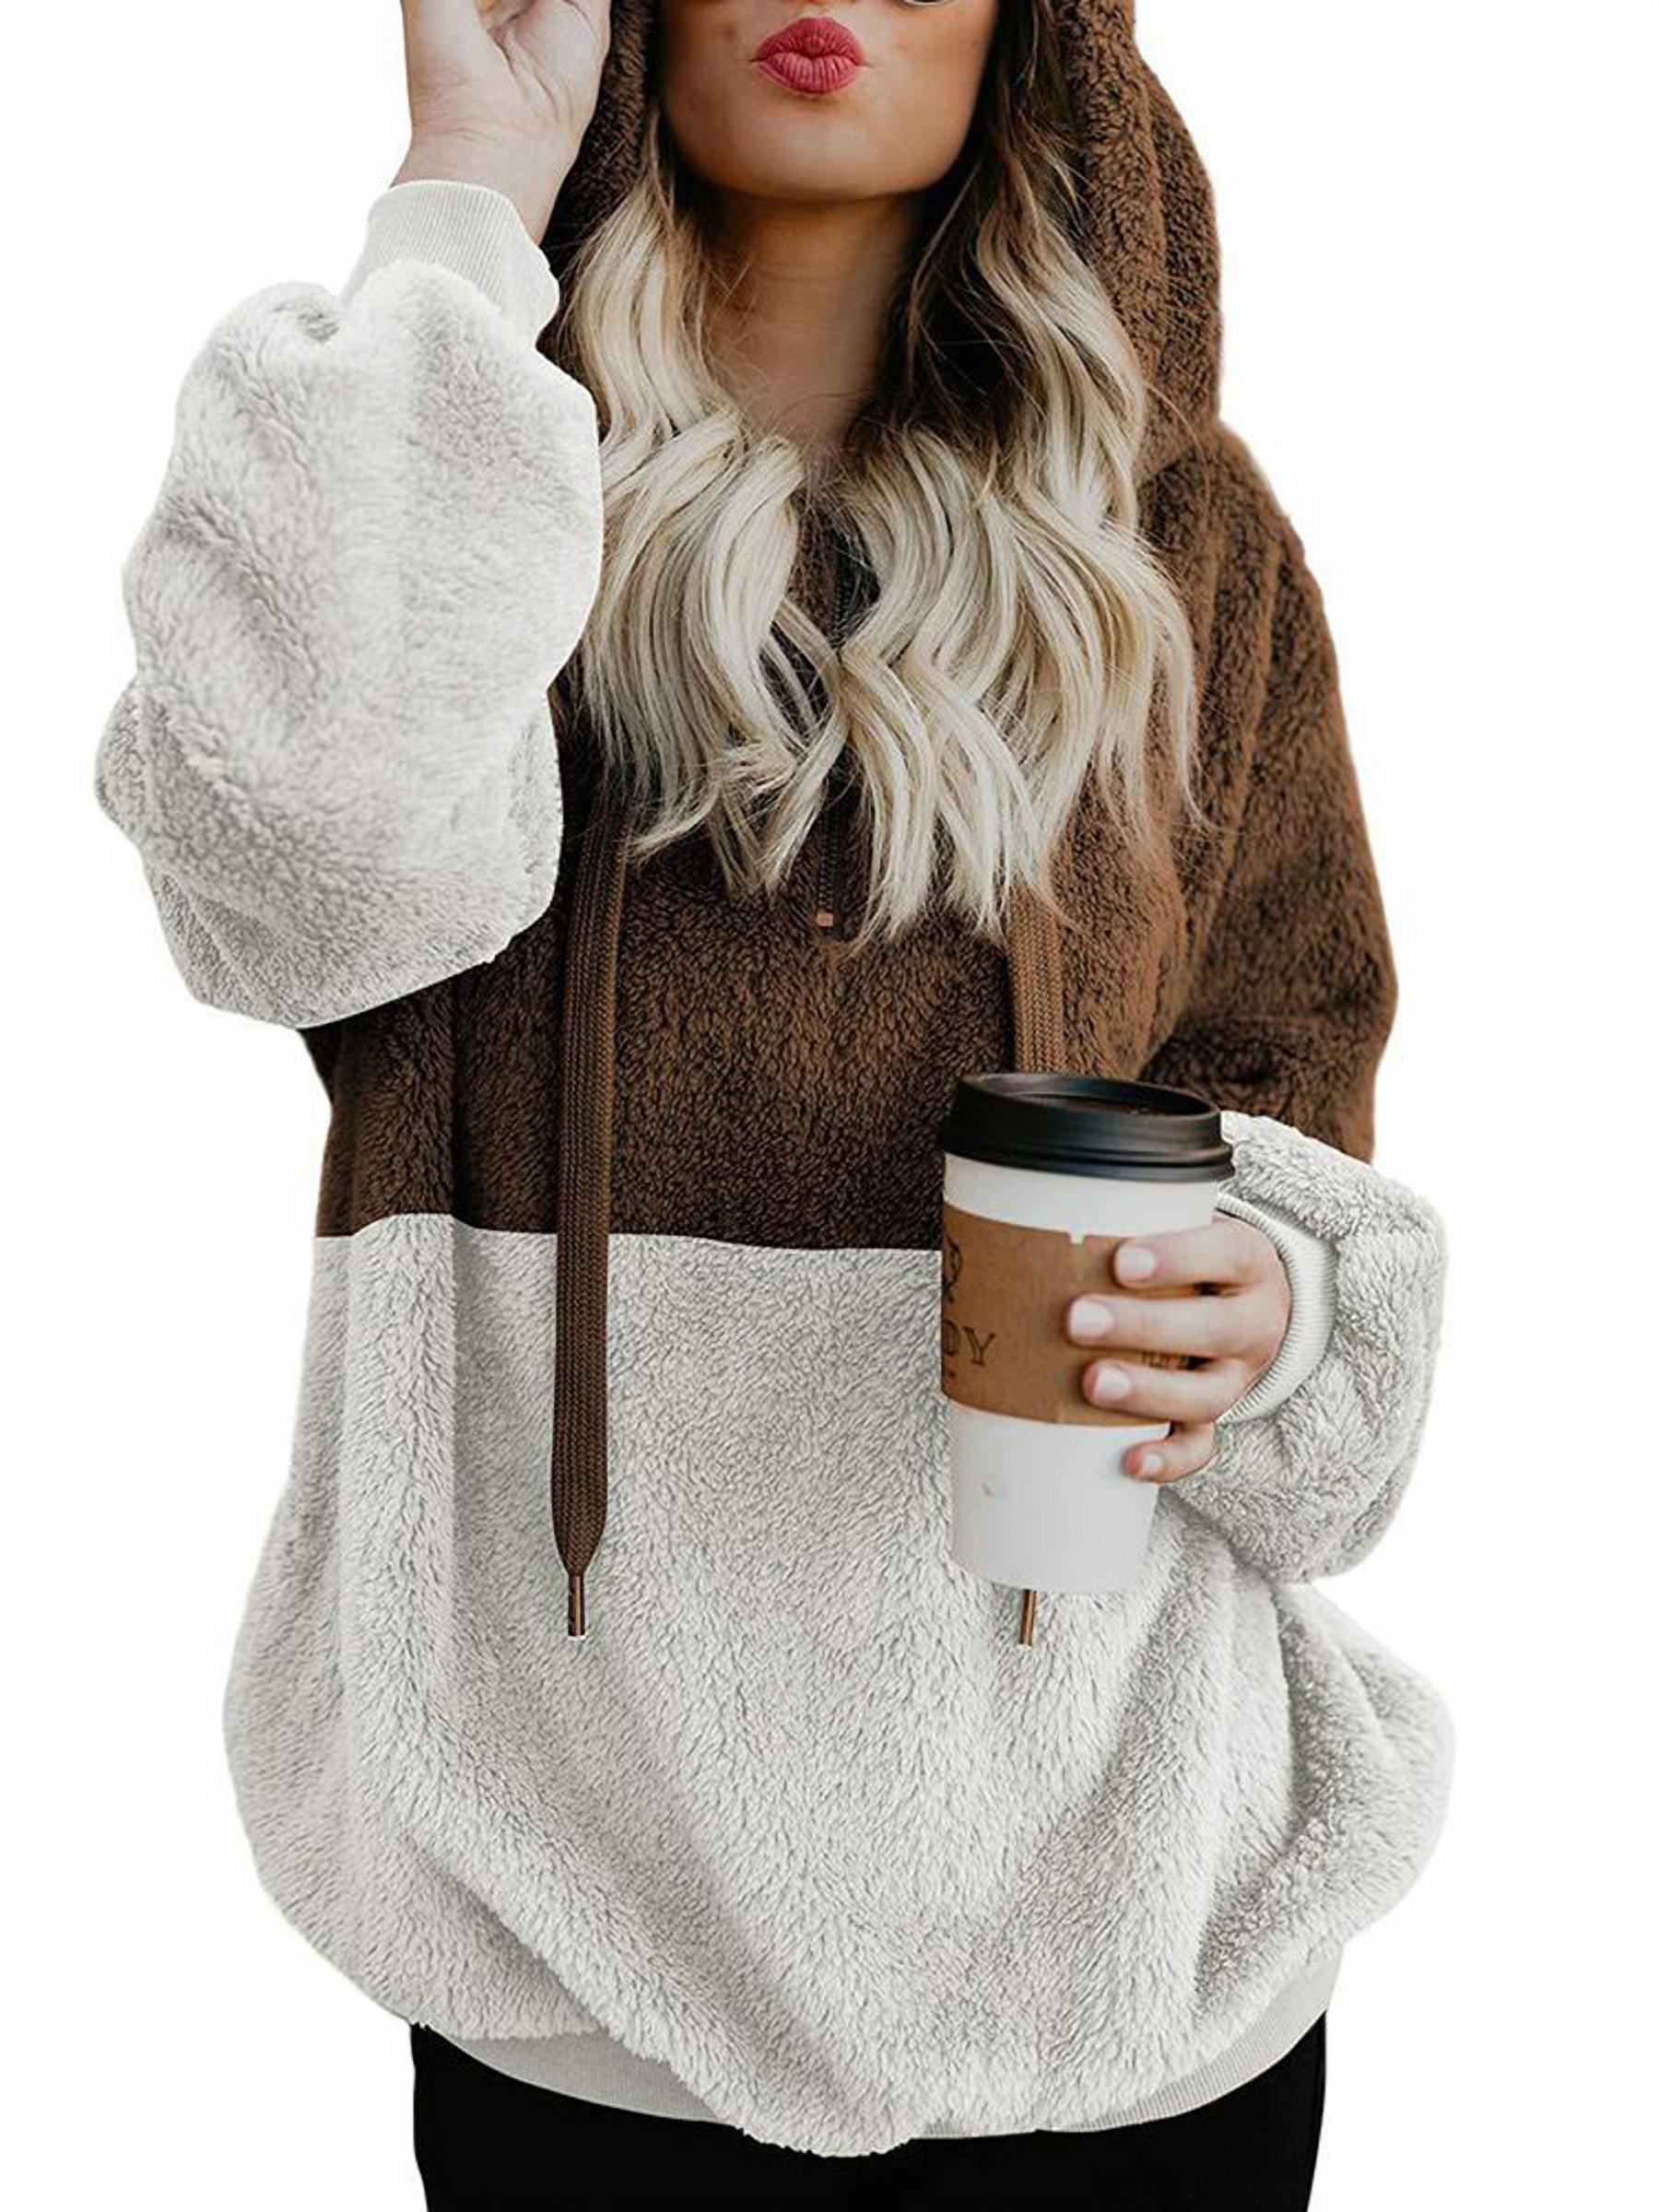 FAPIZI Womens Hoodies Autumn Winter Long Sleeve Drawstring Fuzzy Fleece Fluffy Warm Hooded Sweatshirts Pullover Tops 